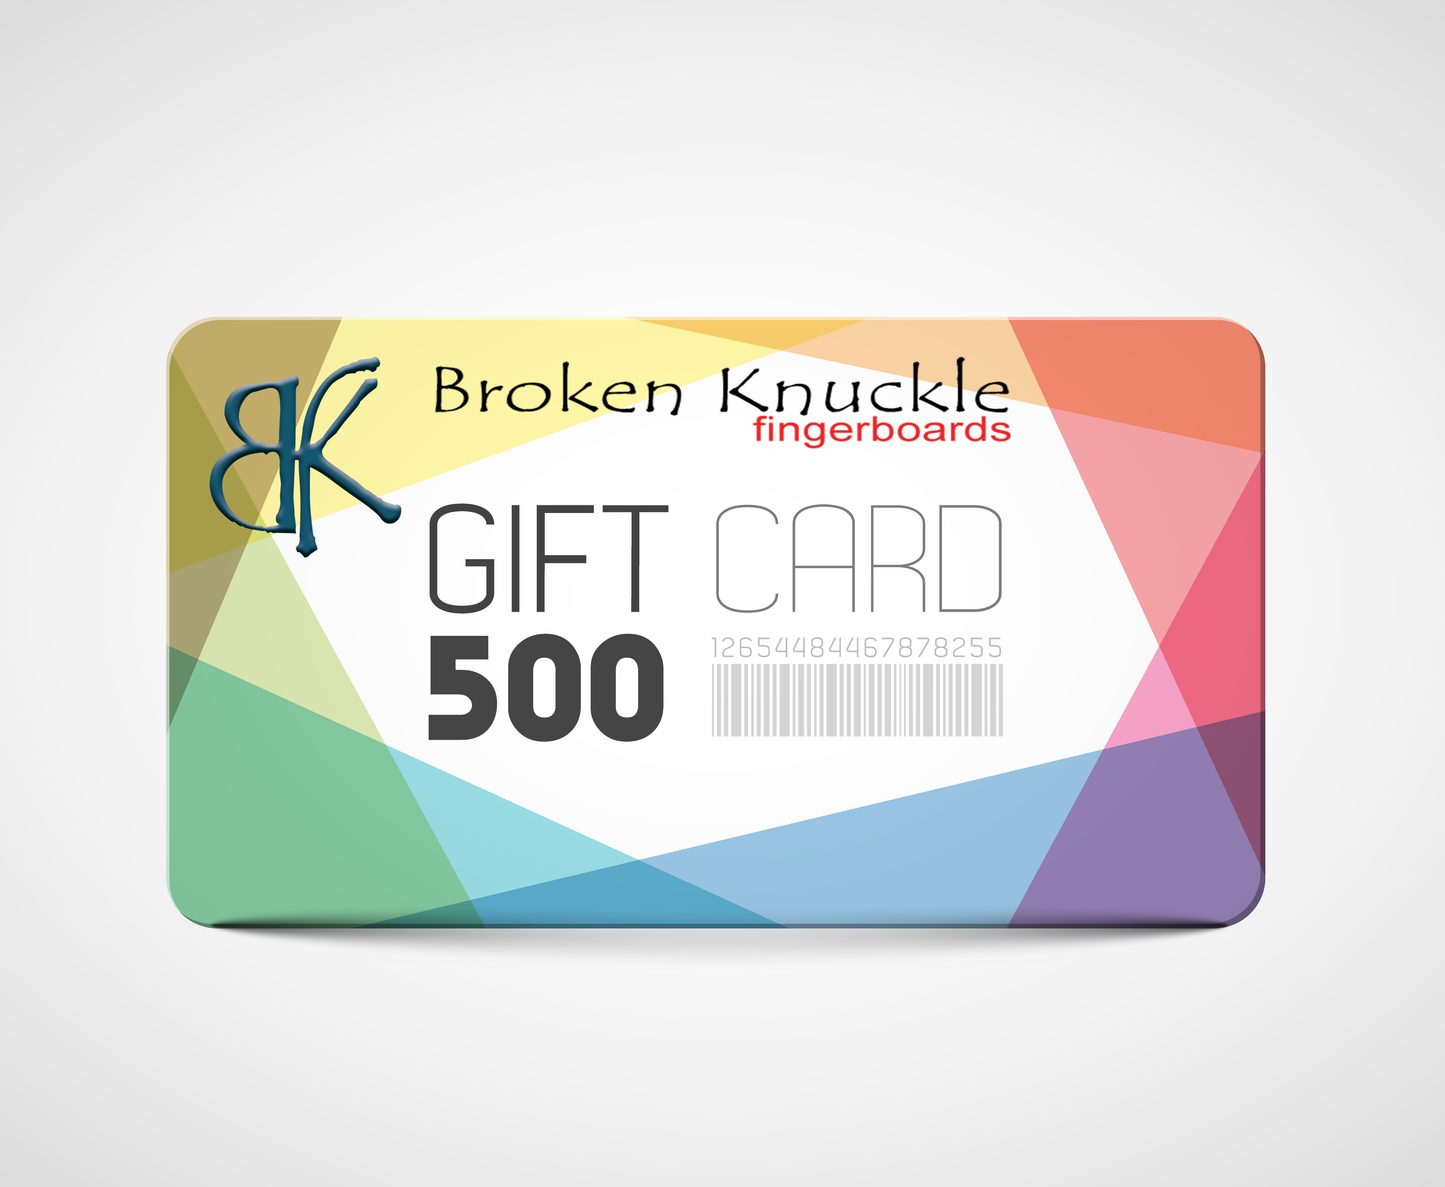 Broken Knuckle fingerboards Gift Card